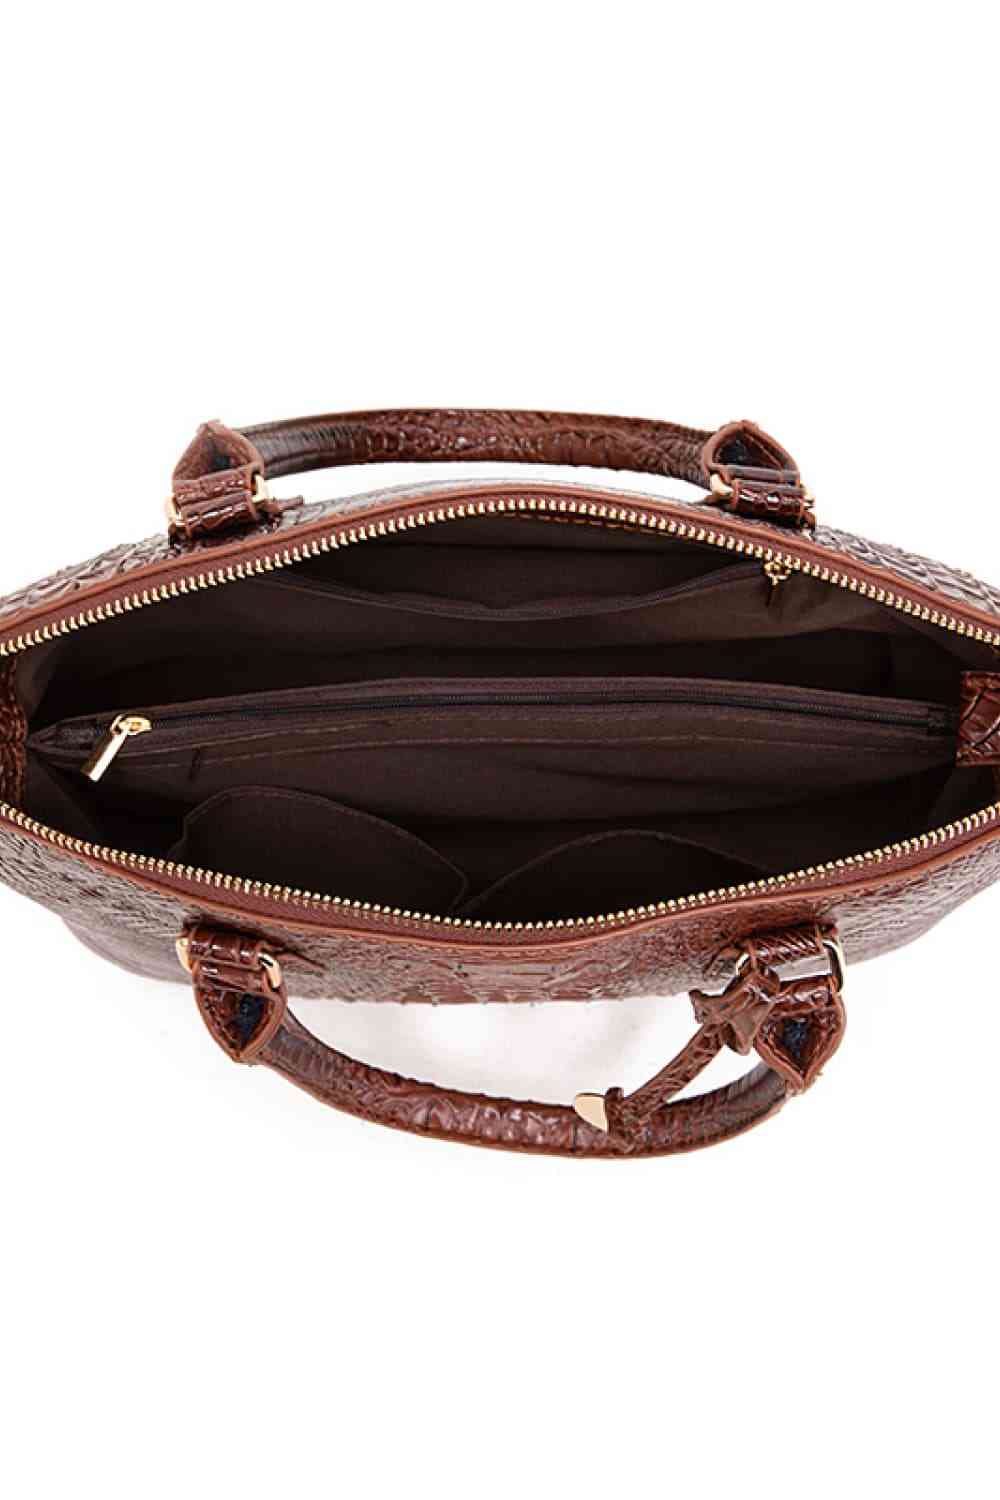 PU Leather 11 inch Handbag